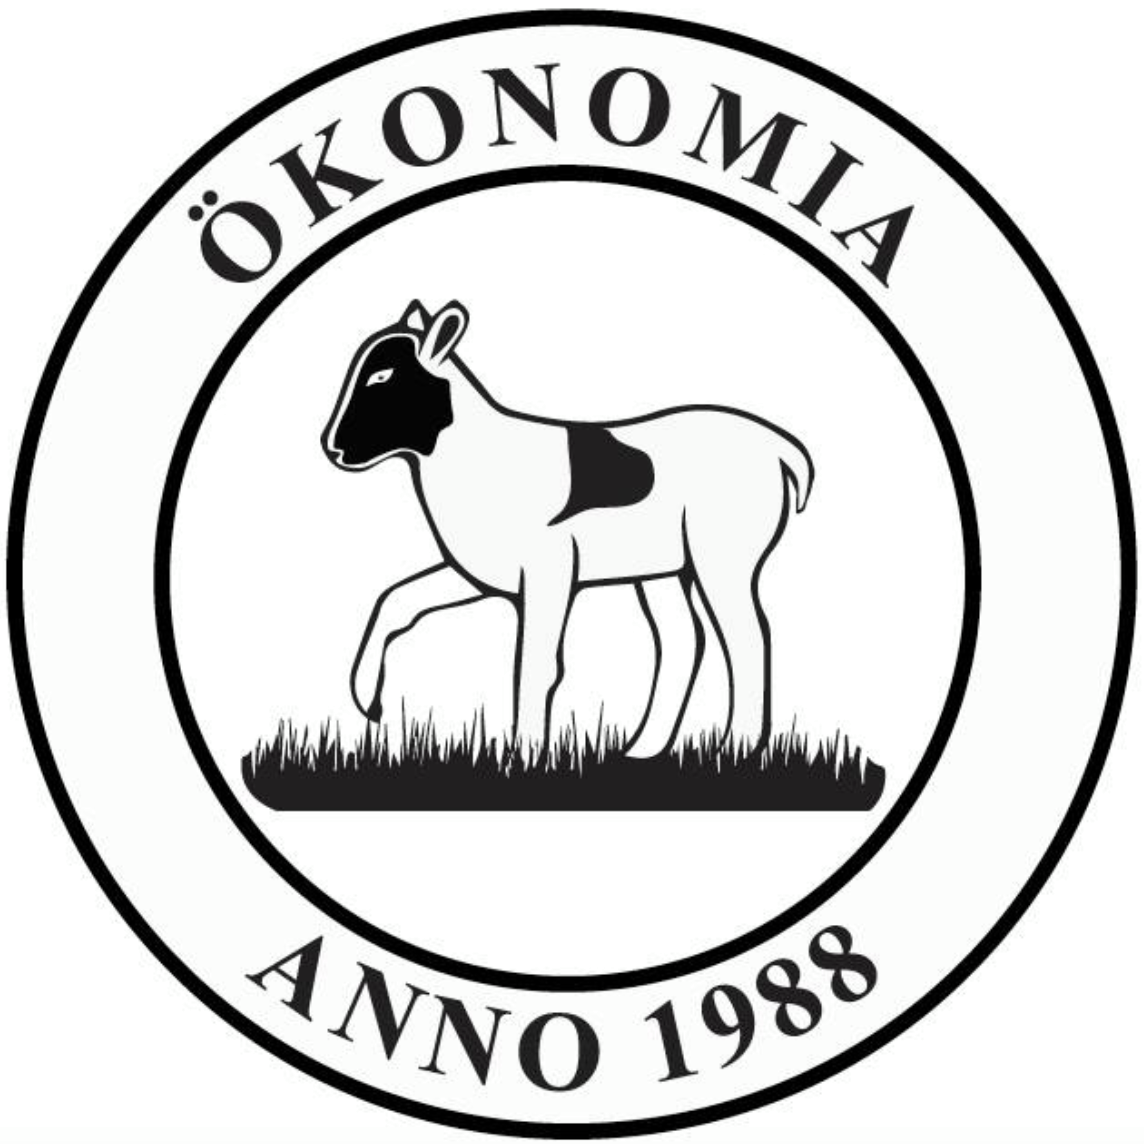 Ökonomía – Student Association for Students in Economics